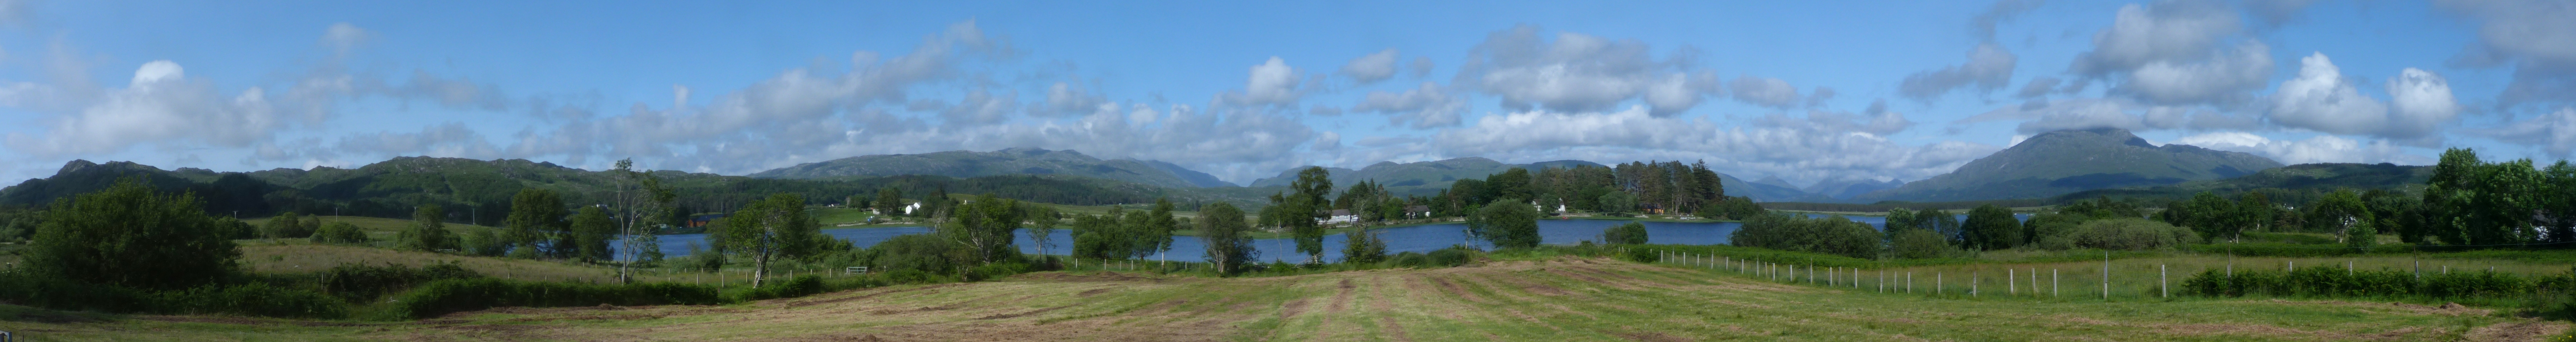 17 Loch Shiel South Panorama.jpg